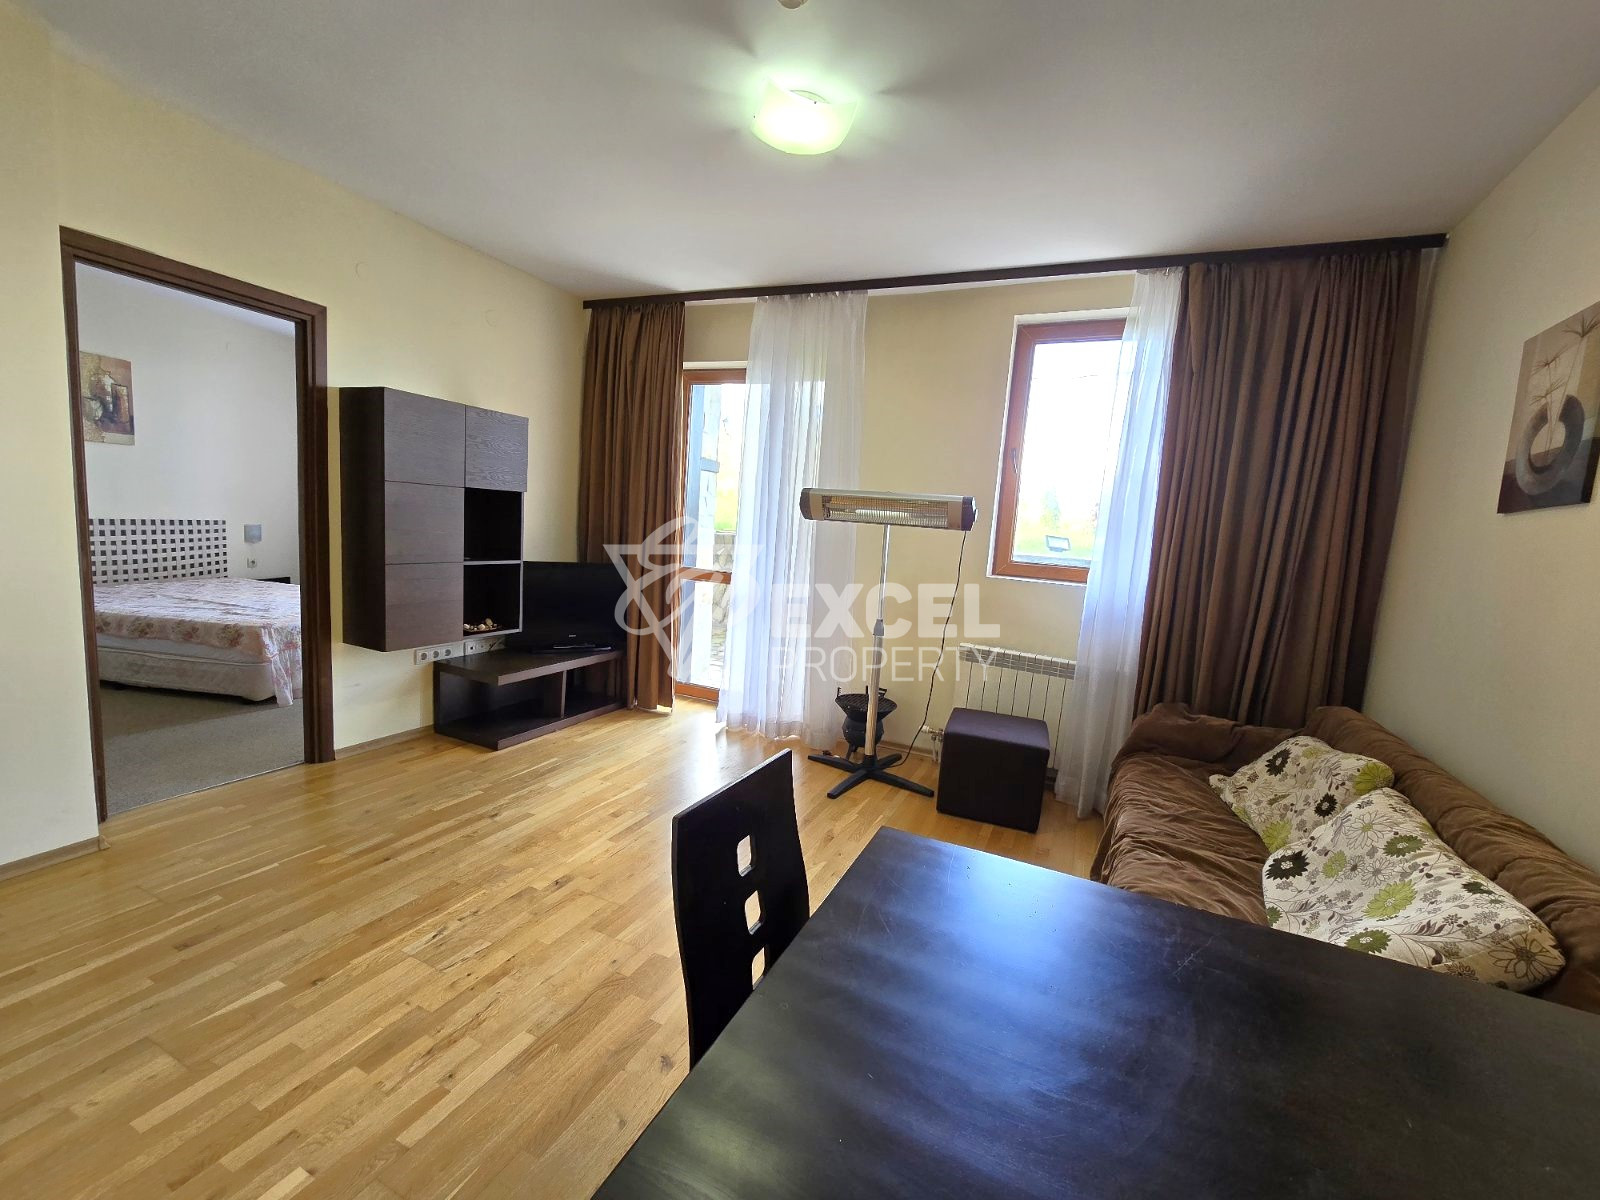 Двустаен апартамент на партерно ниво за продажба в комплекс All Seasons Club, Банско